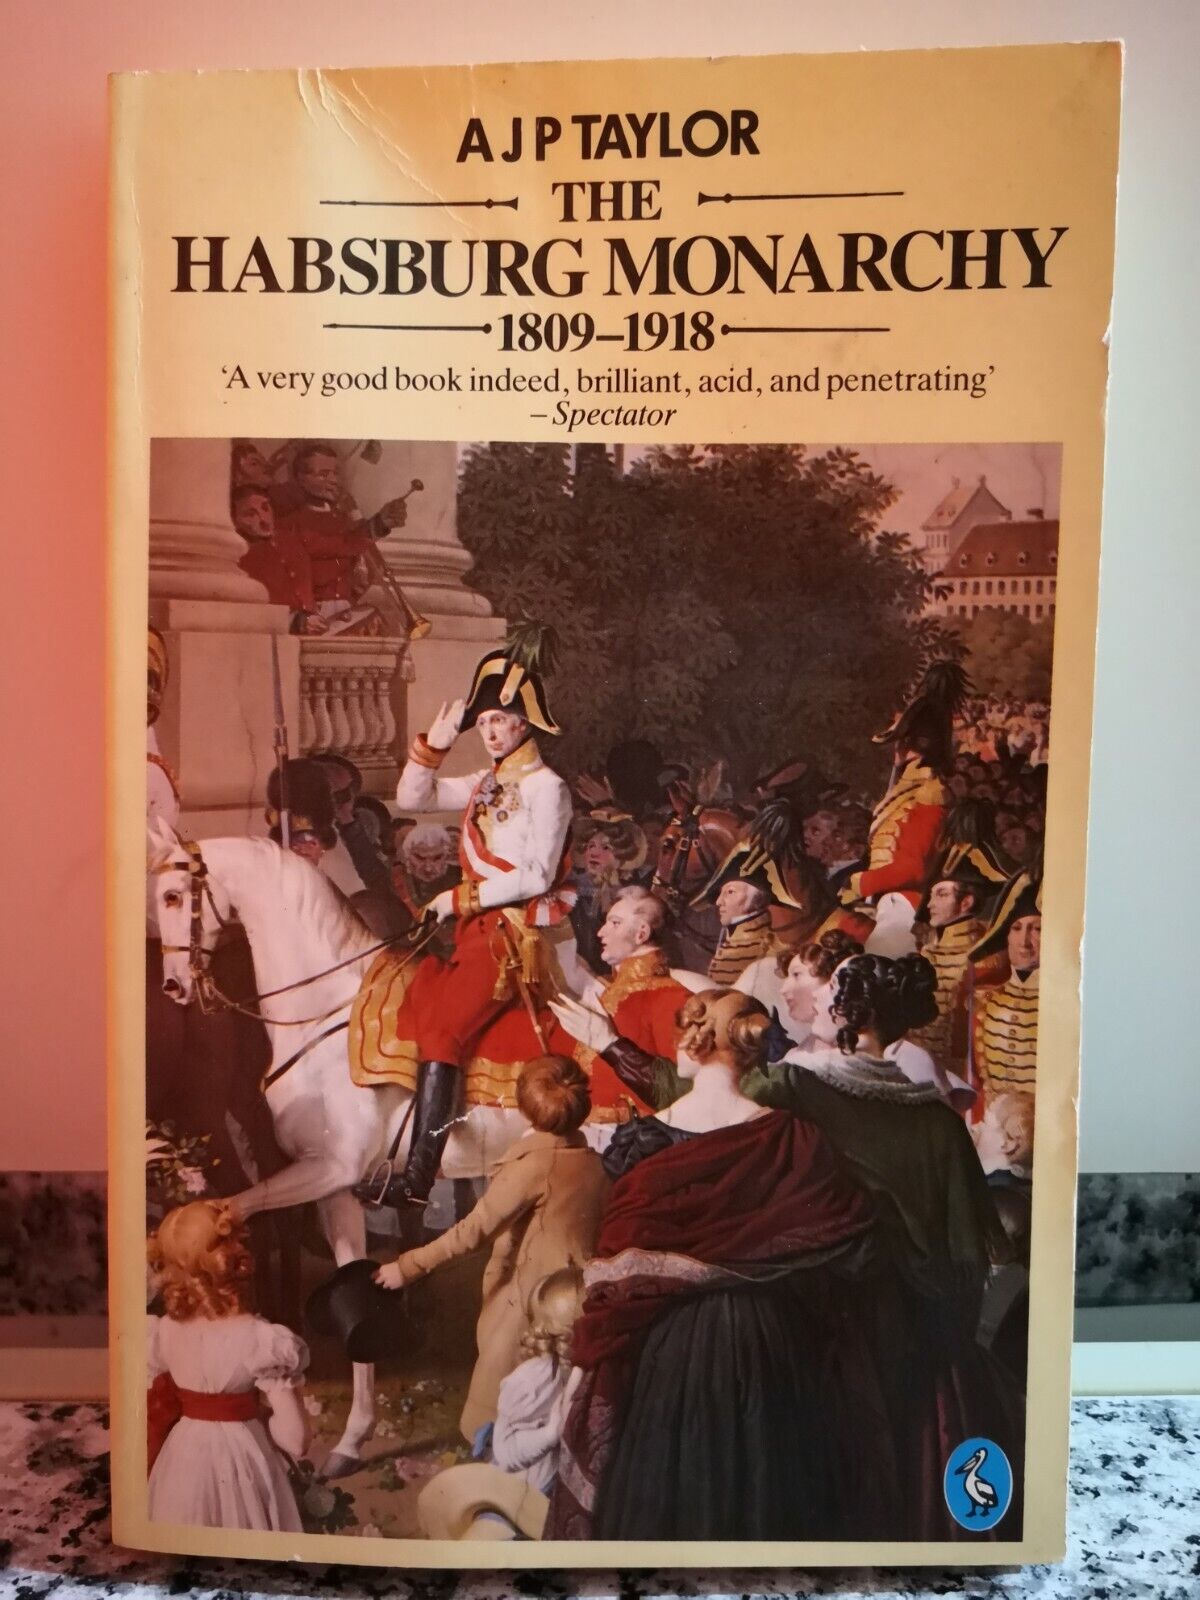  The habsburg monarchy 1809-1918 di A J P Taylor,  1948,  Penguin Books-F